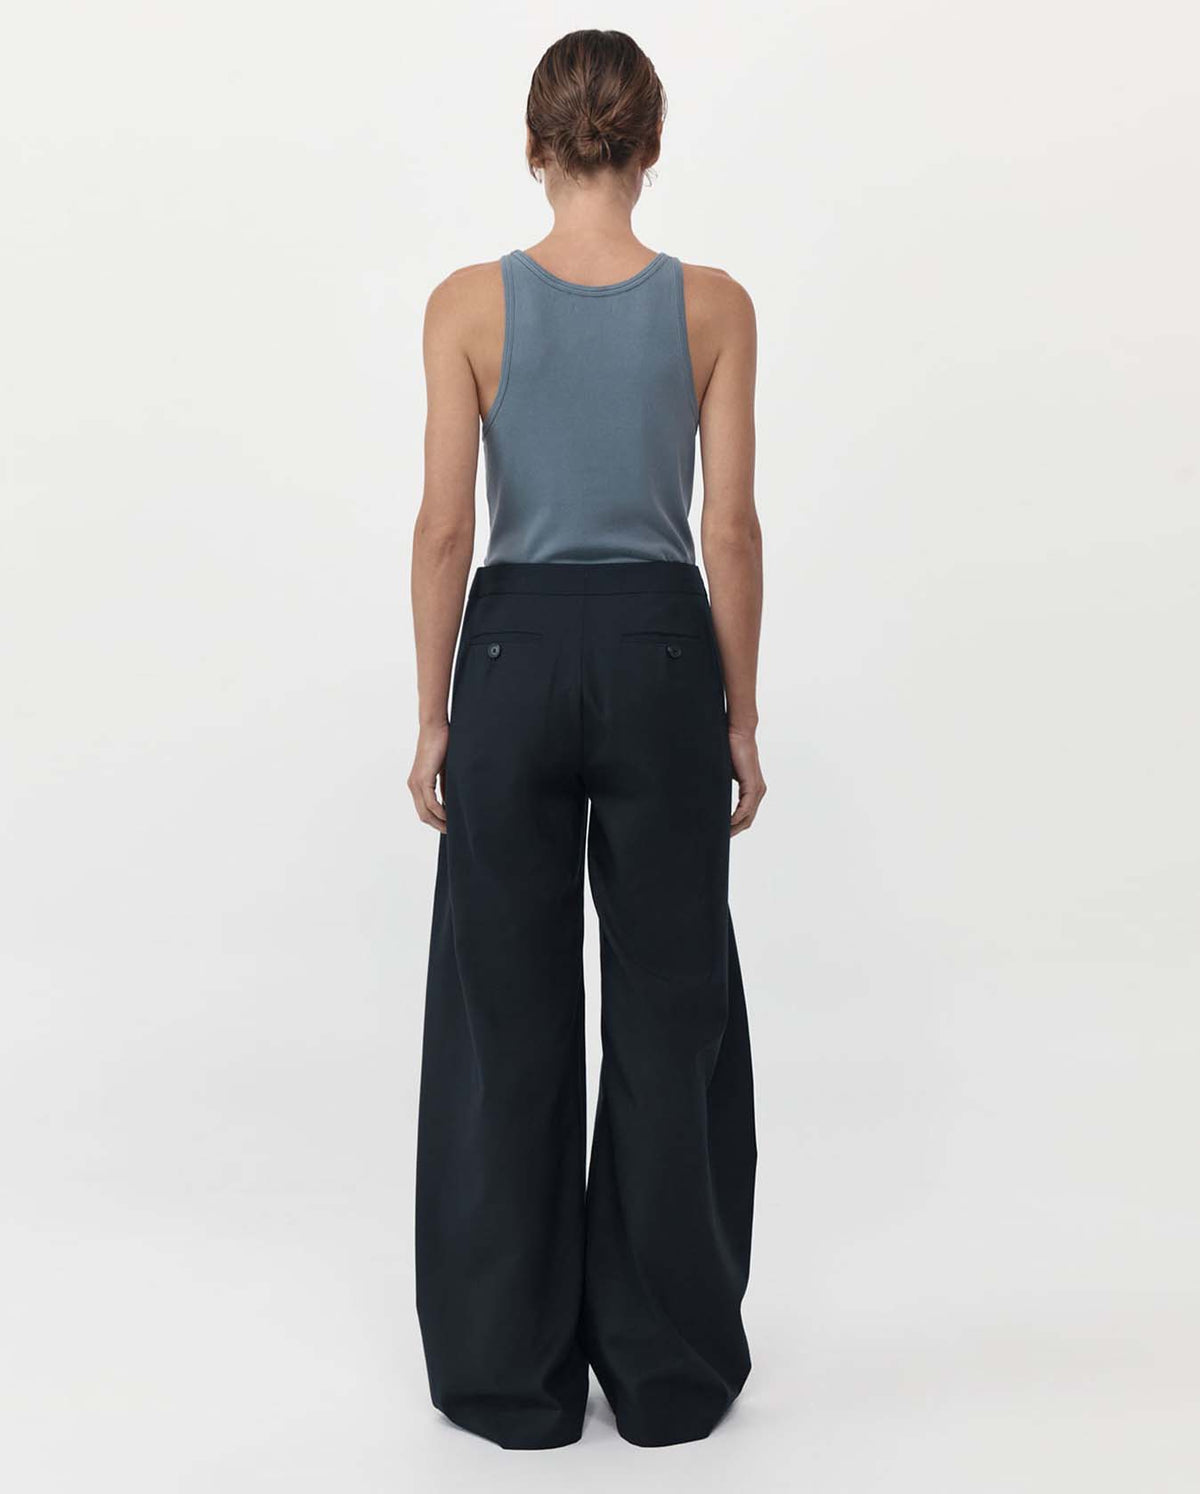 Fold Detail Trousers - Black